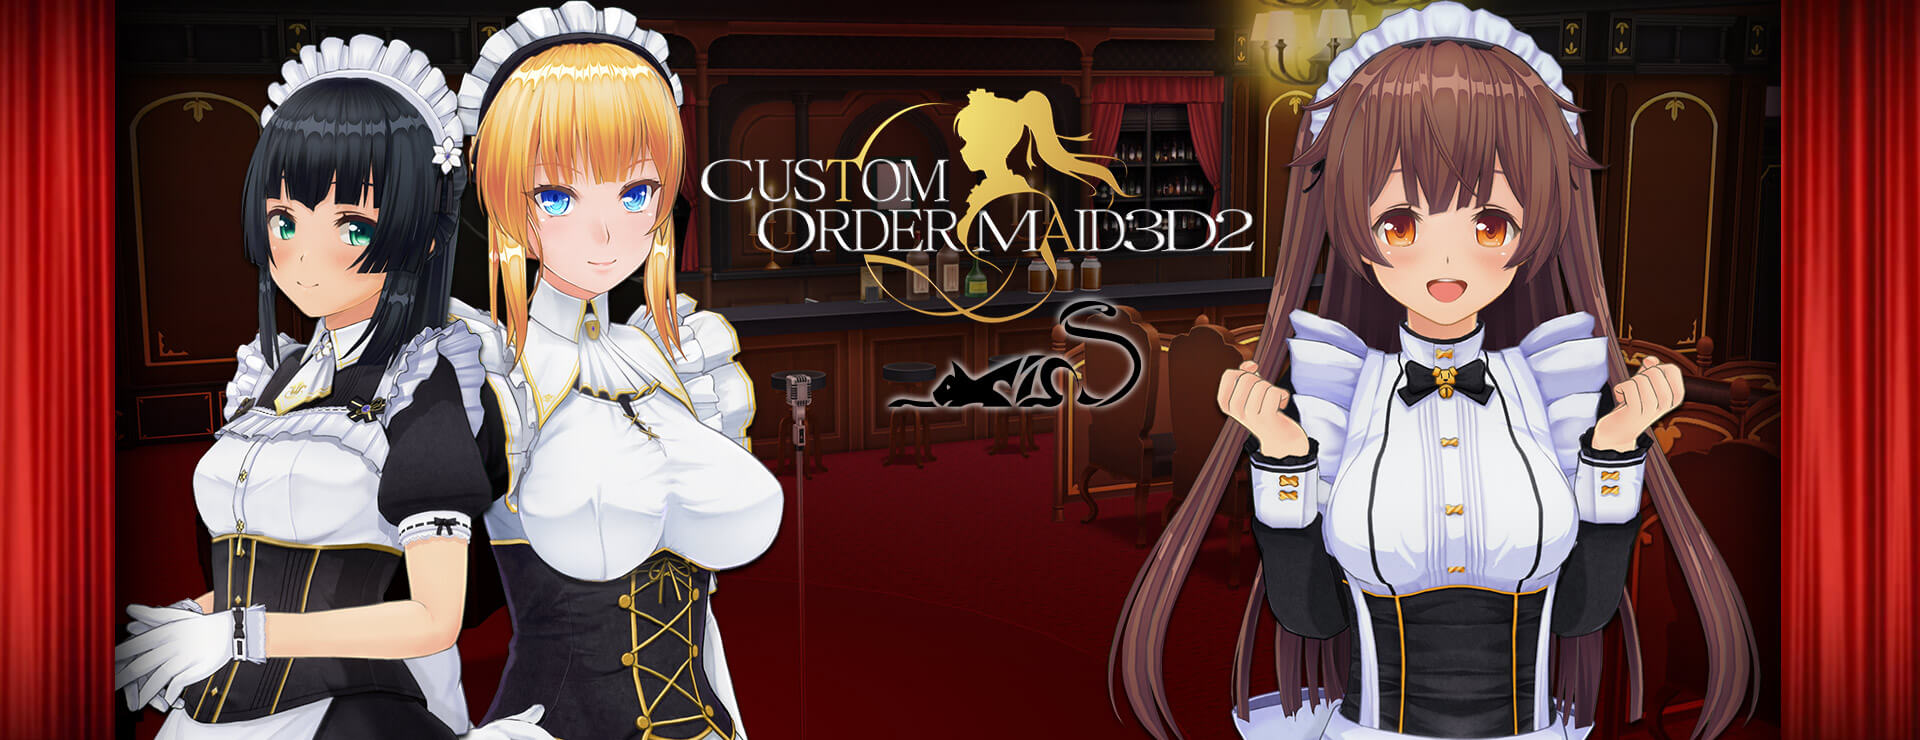 Custom Order Maid 3D2 - It's a Night Magic Premium Empire Bundle - 仿真游戏 遊戲